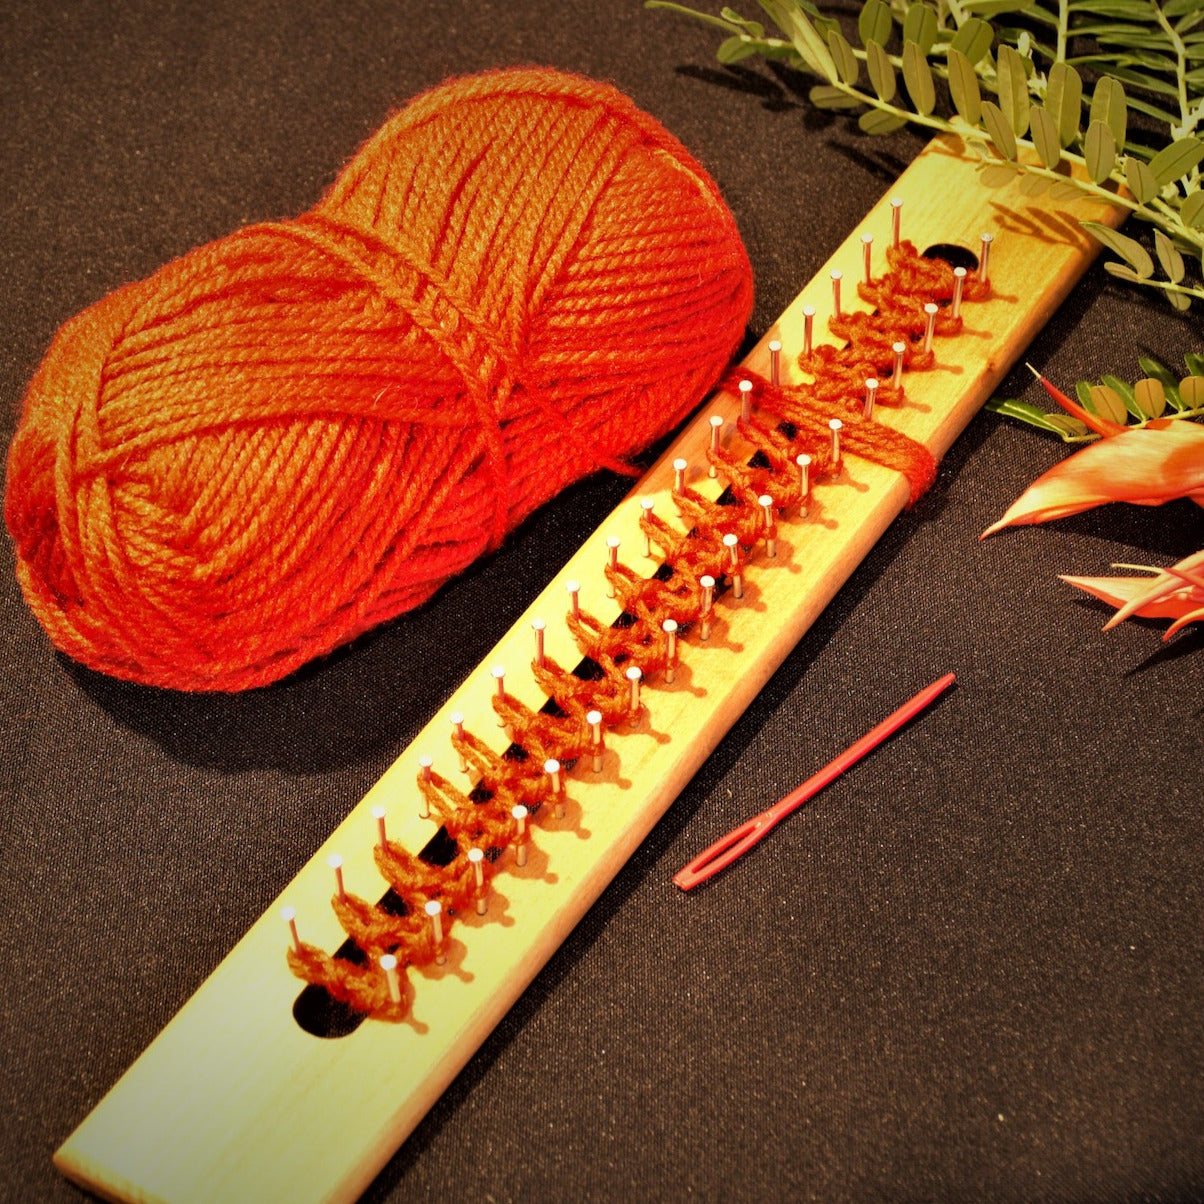 Scarf knitting board